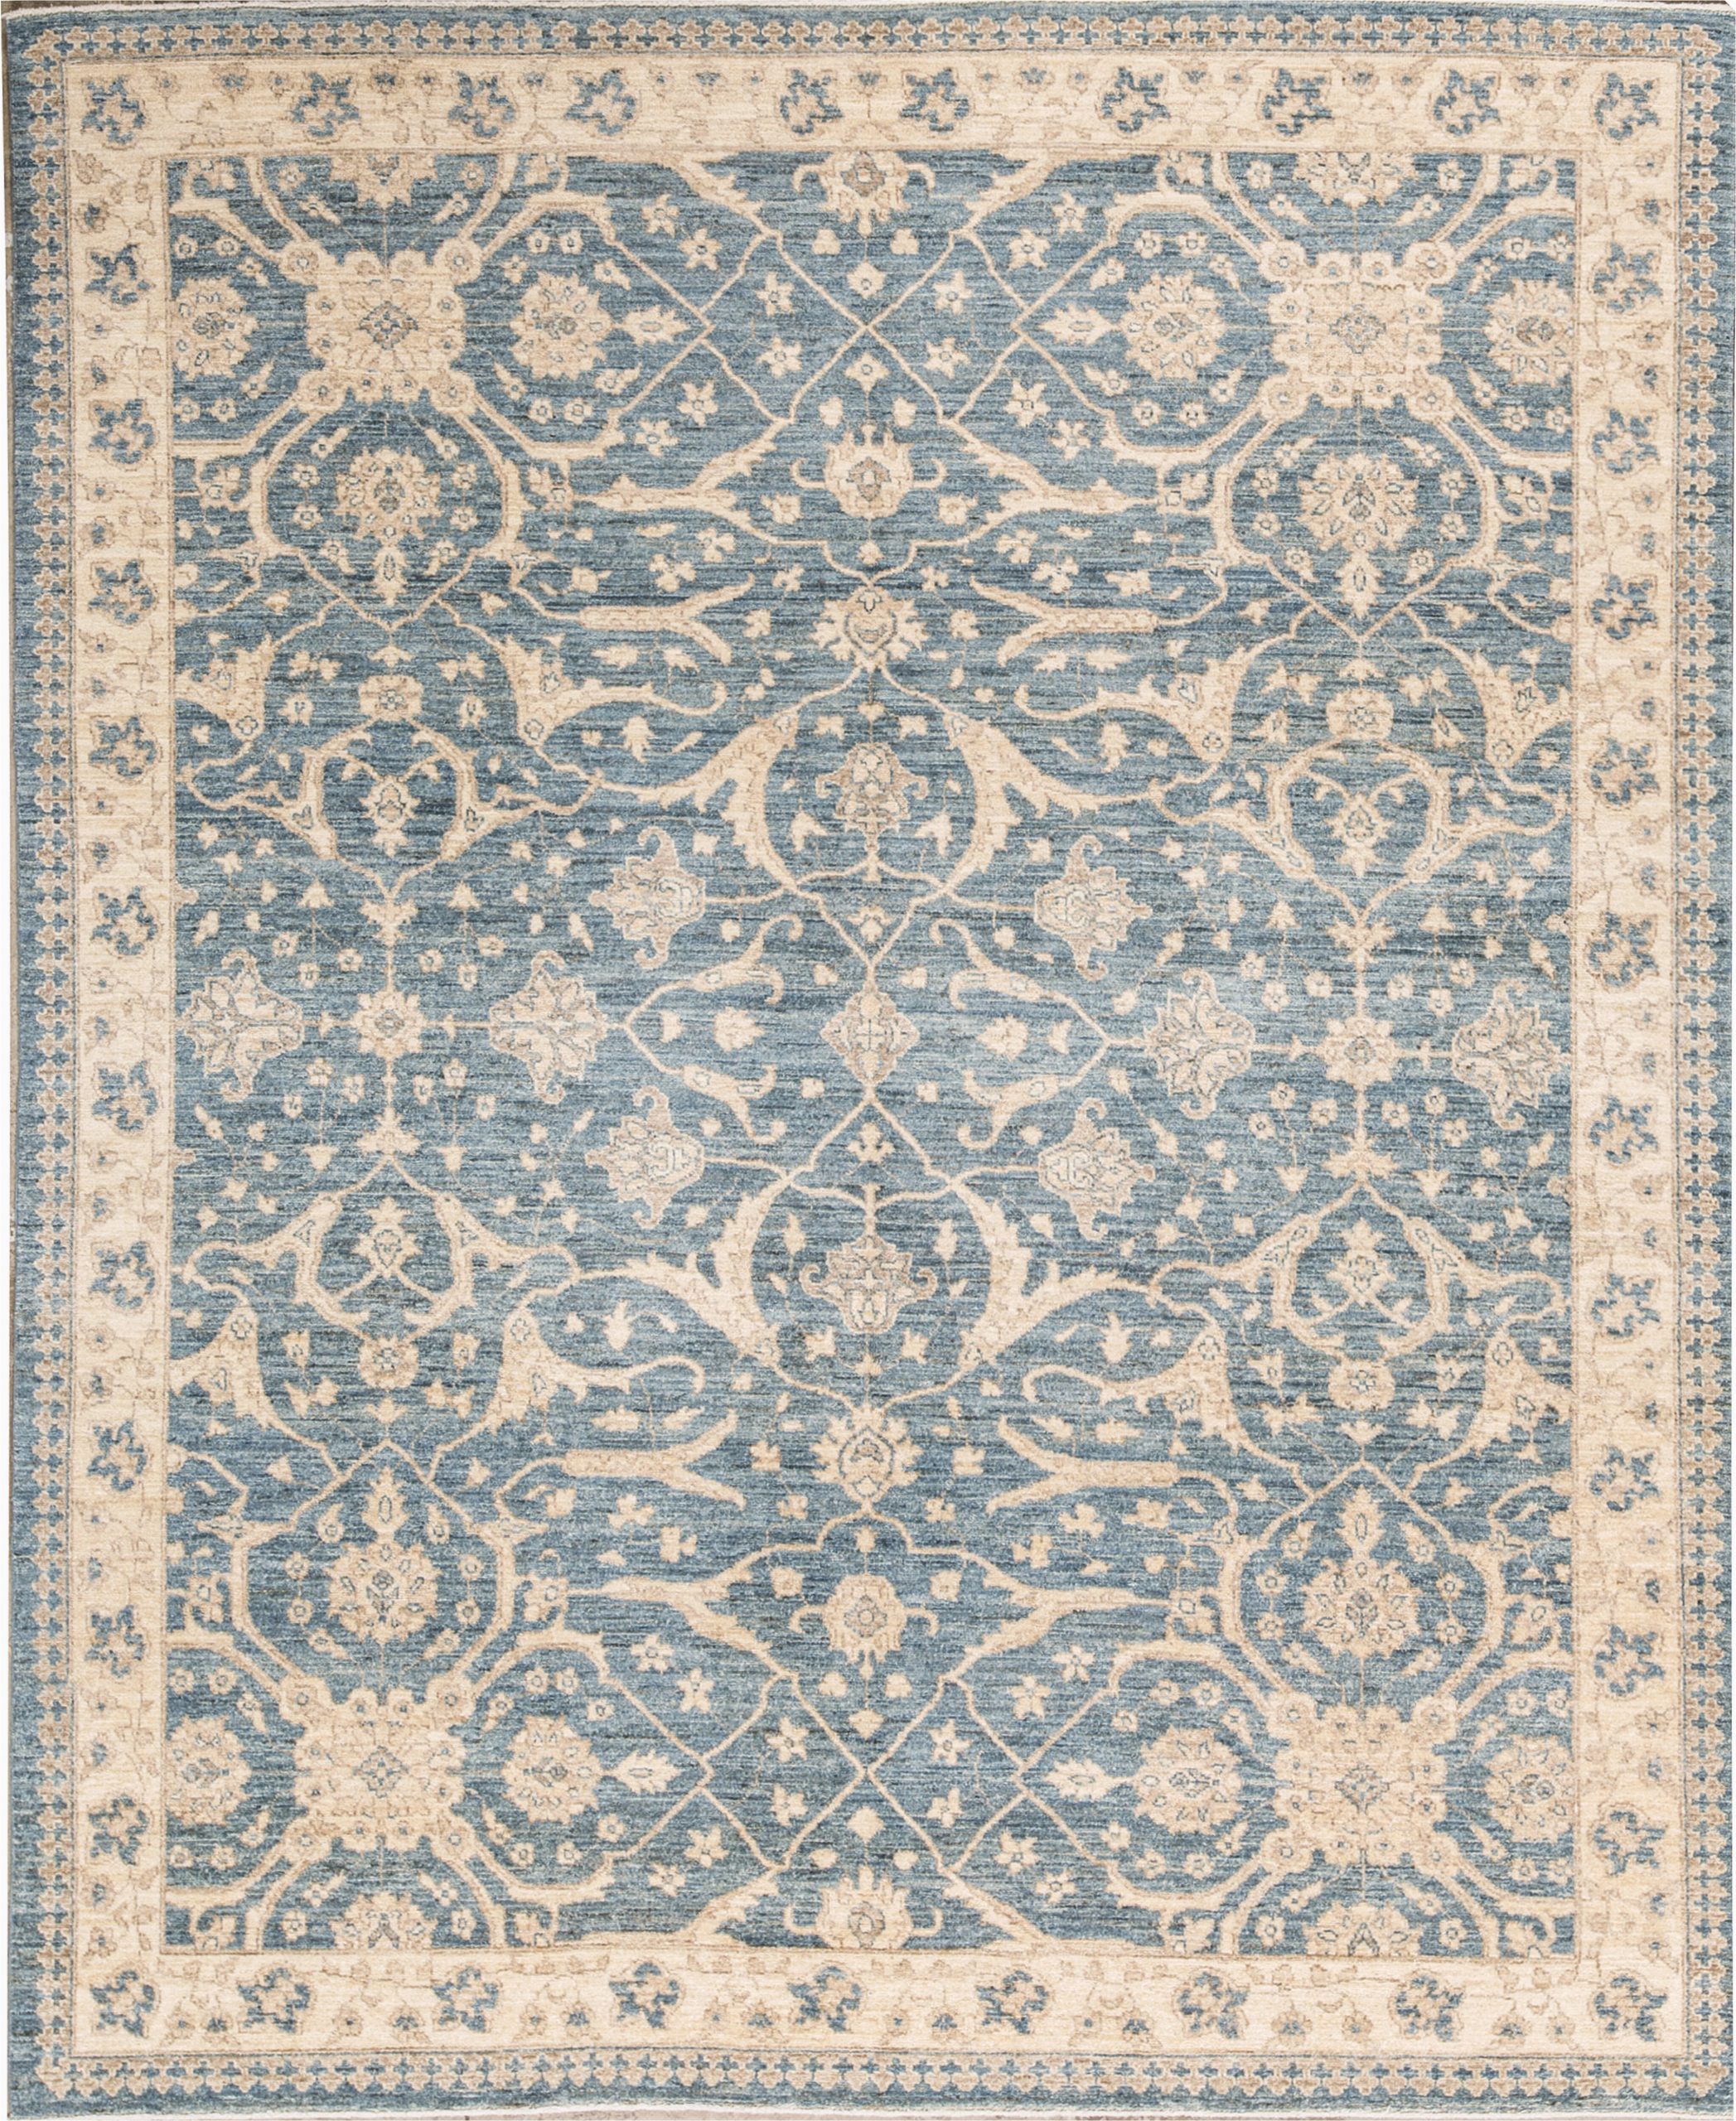 sultanabad oriental hand knotted wool light bluecream area rug